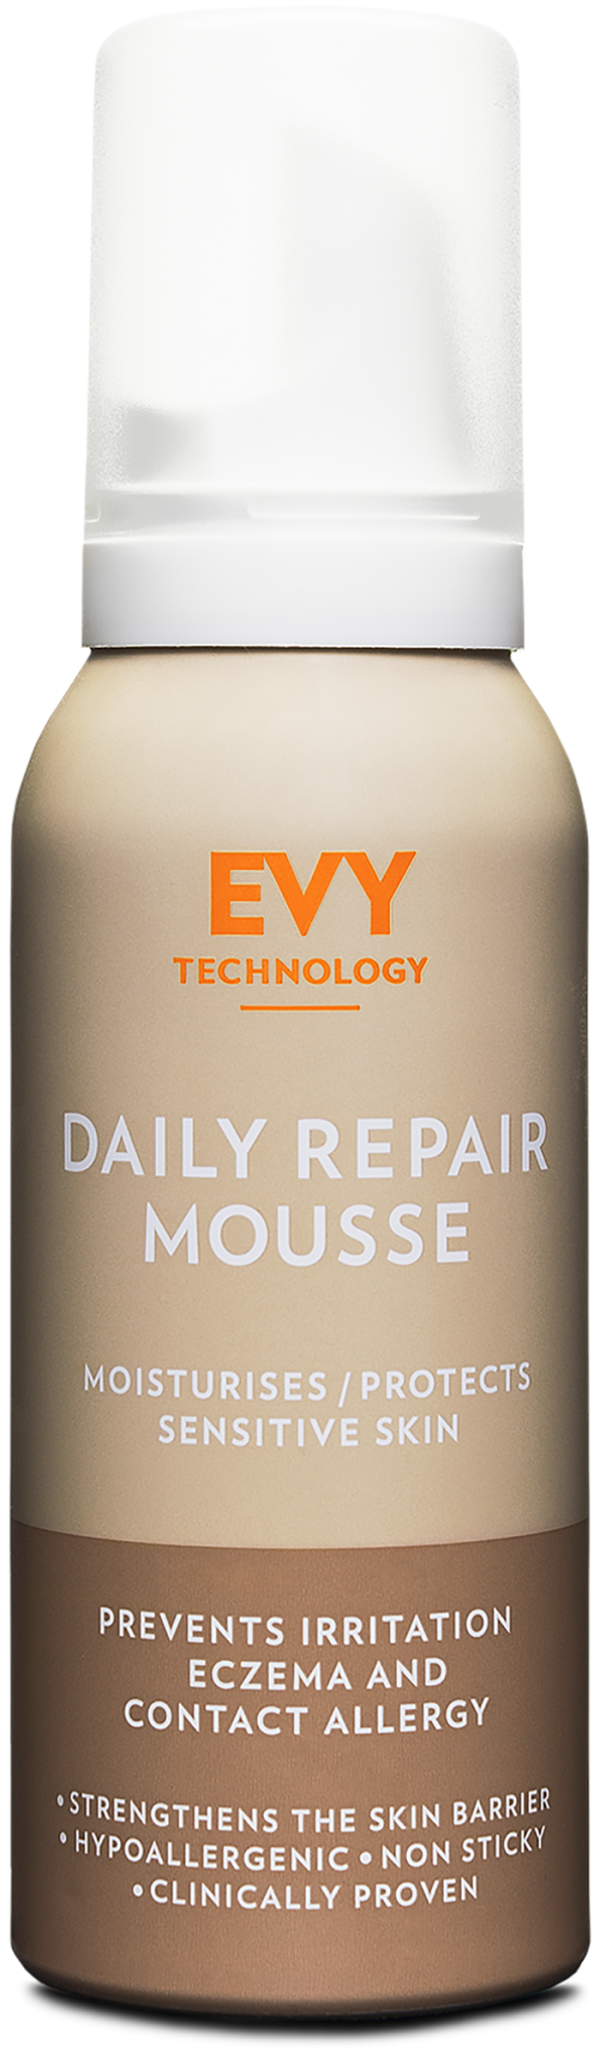 Evy Daily Repair mousse 100 ml